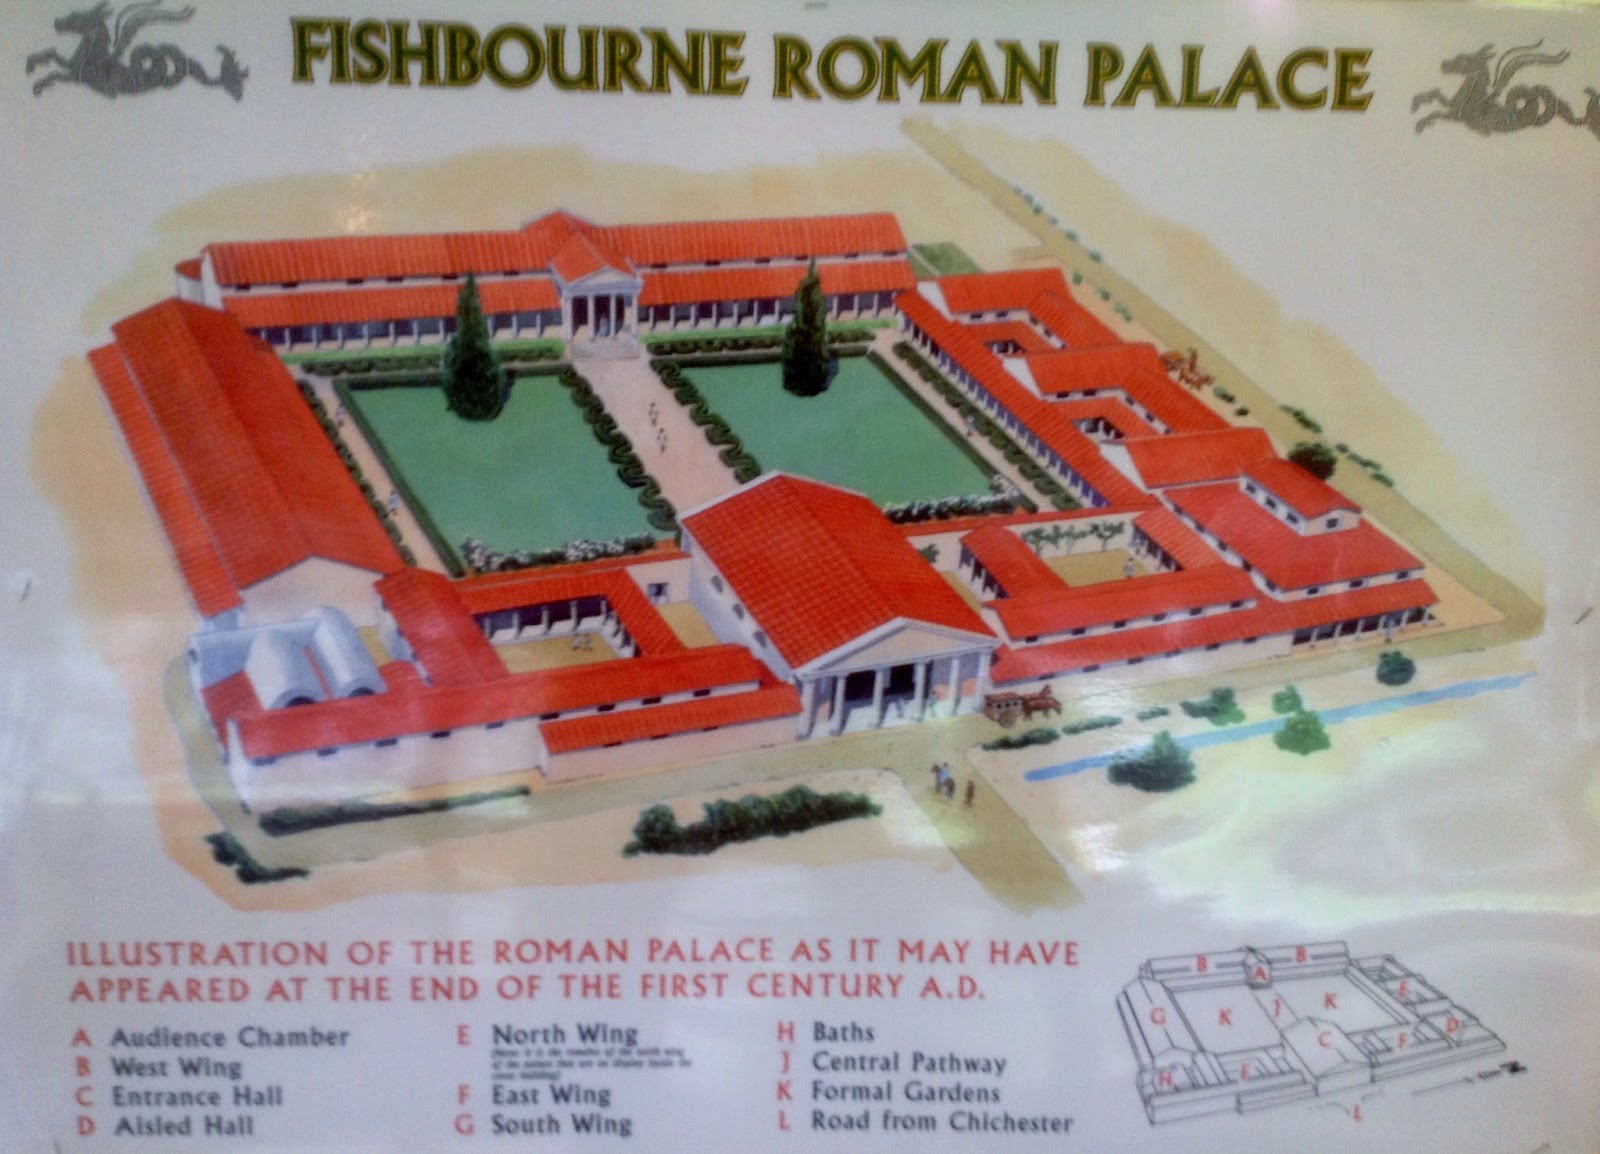 Read Roman Mosaics The Mystery of Fishbourne Roman Palace